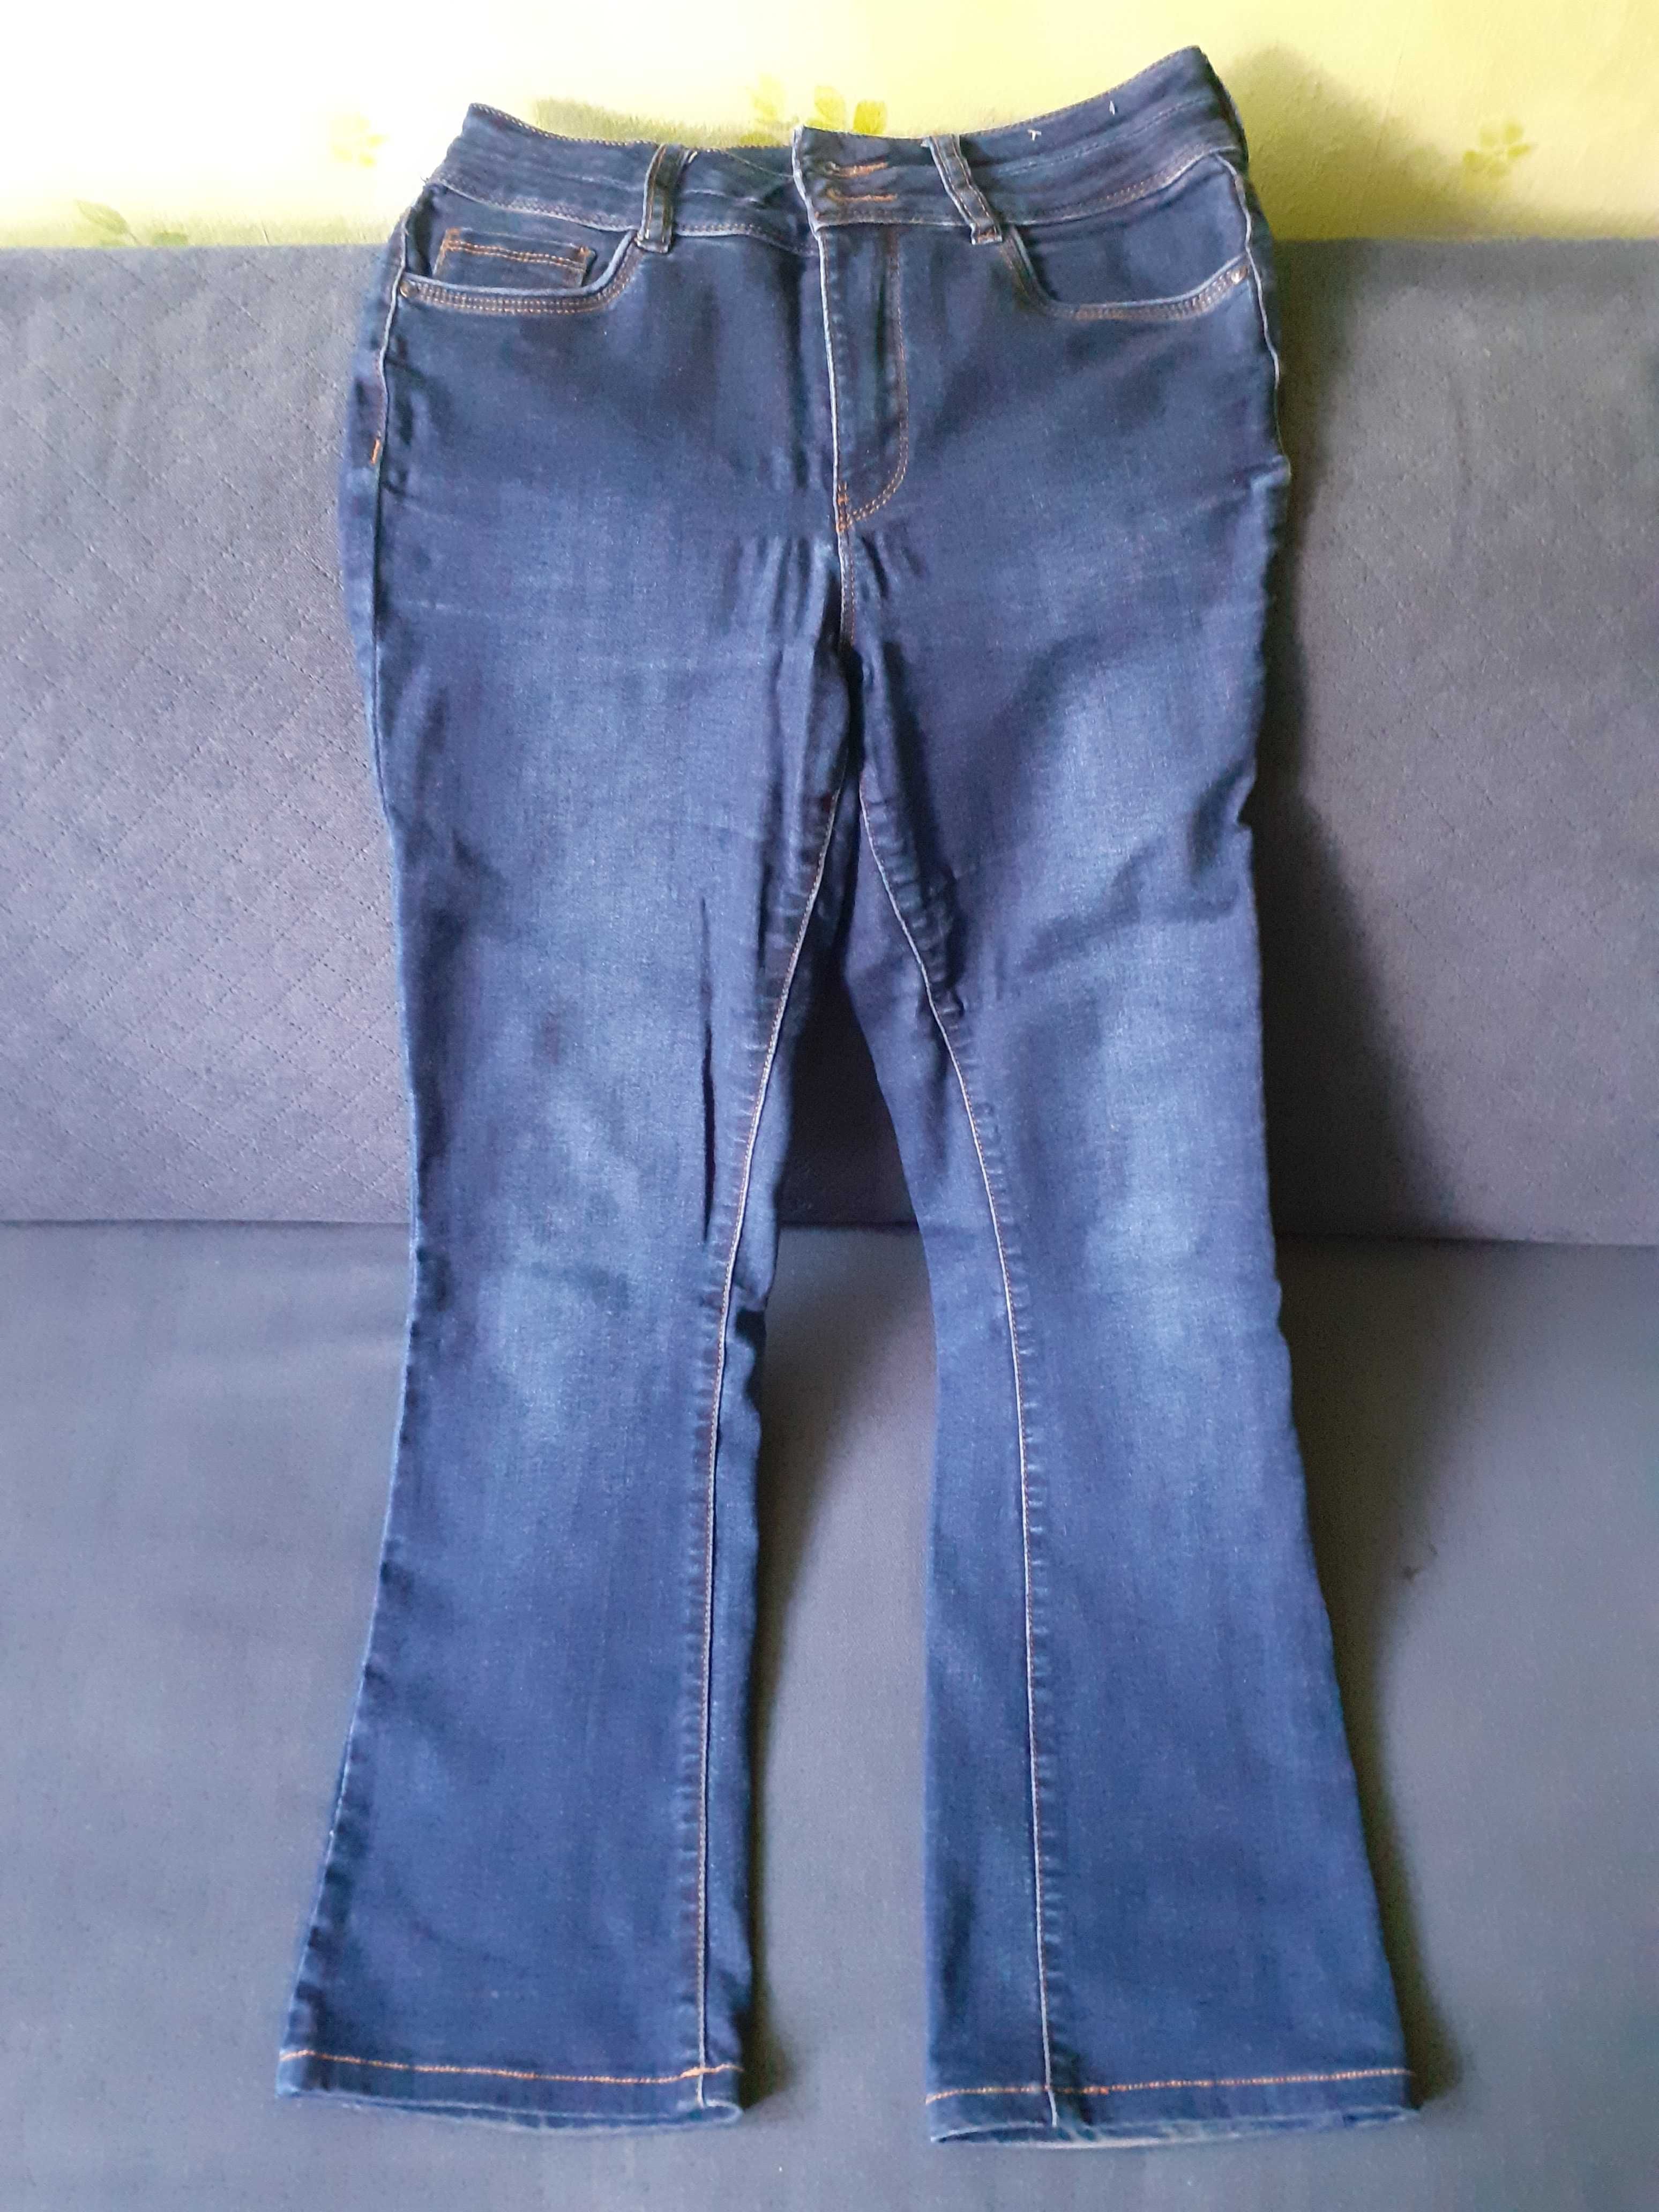 Spodnie jeansy dżinsy F & F – rozmiar 34